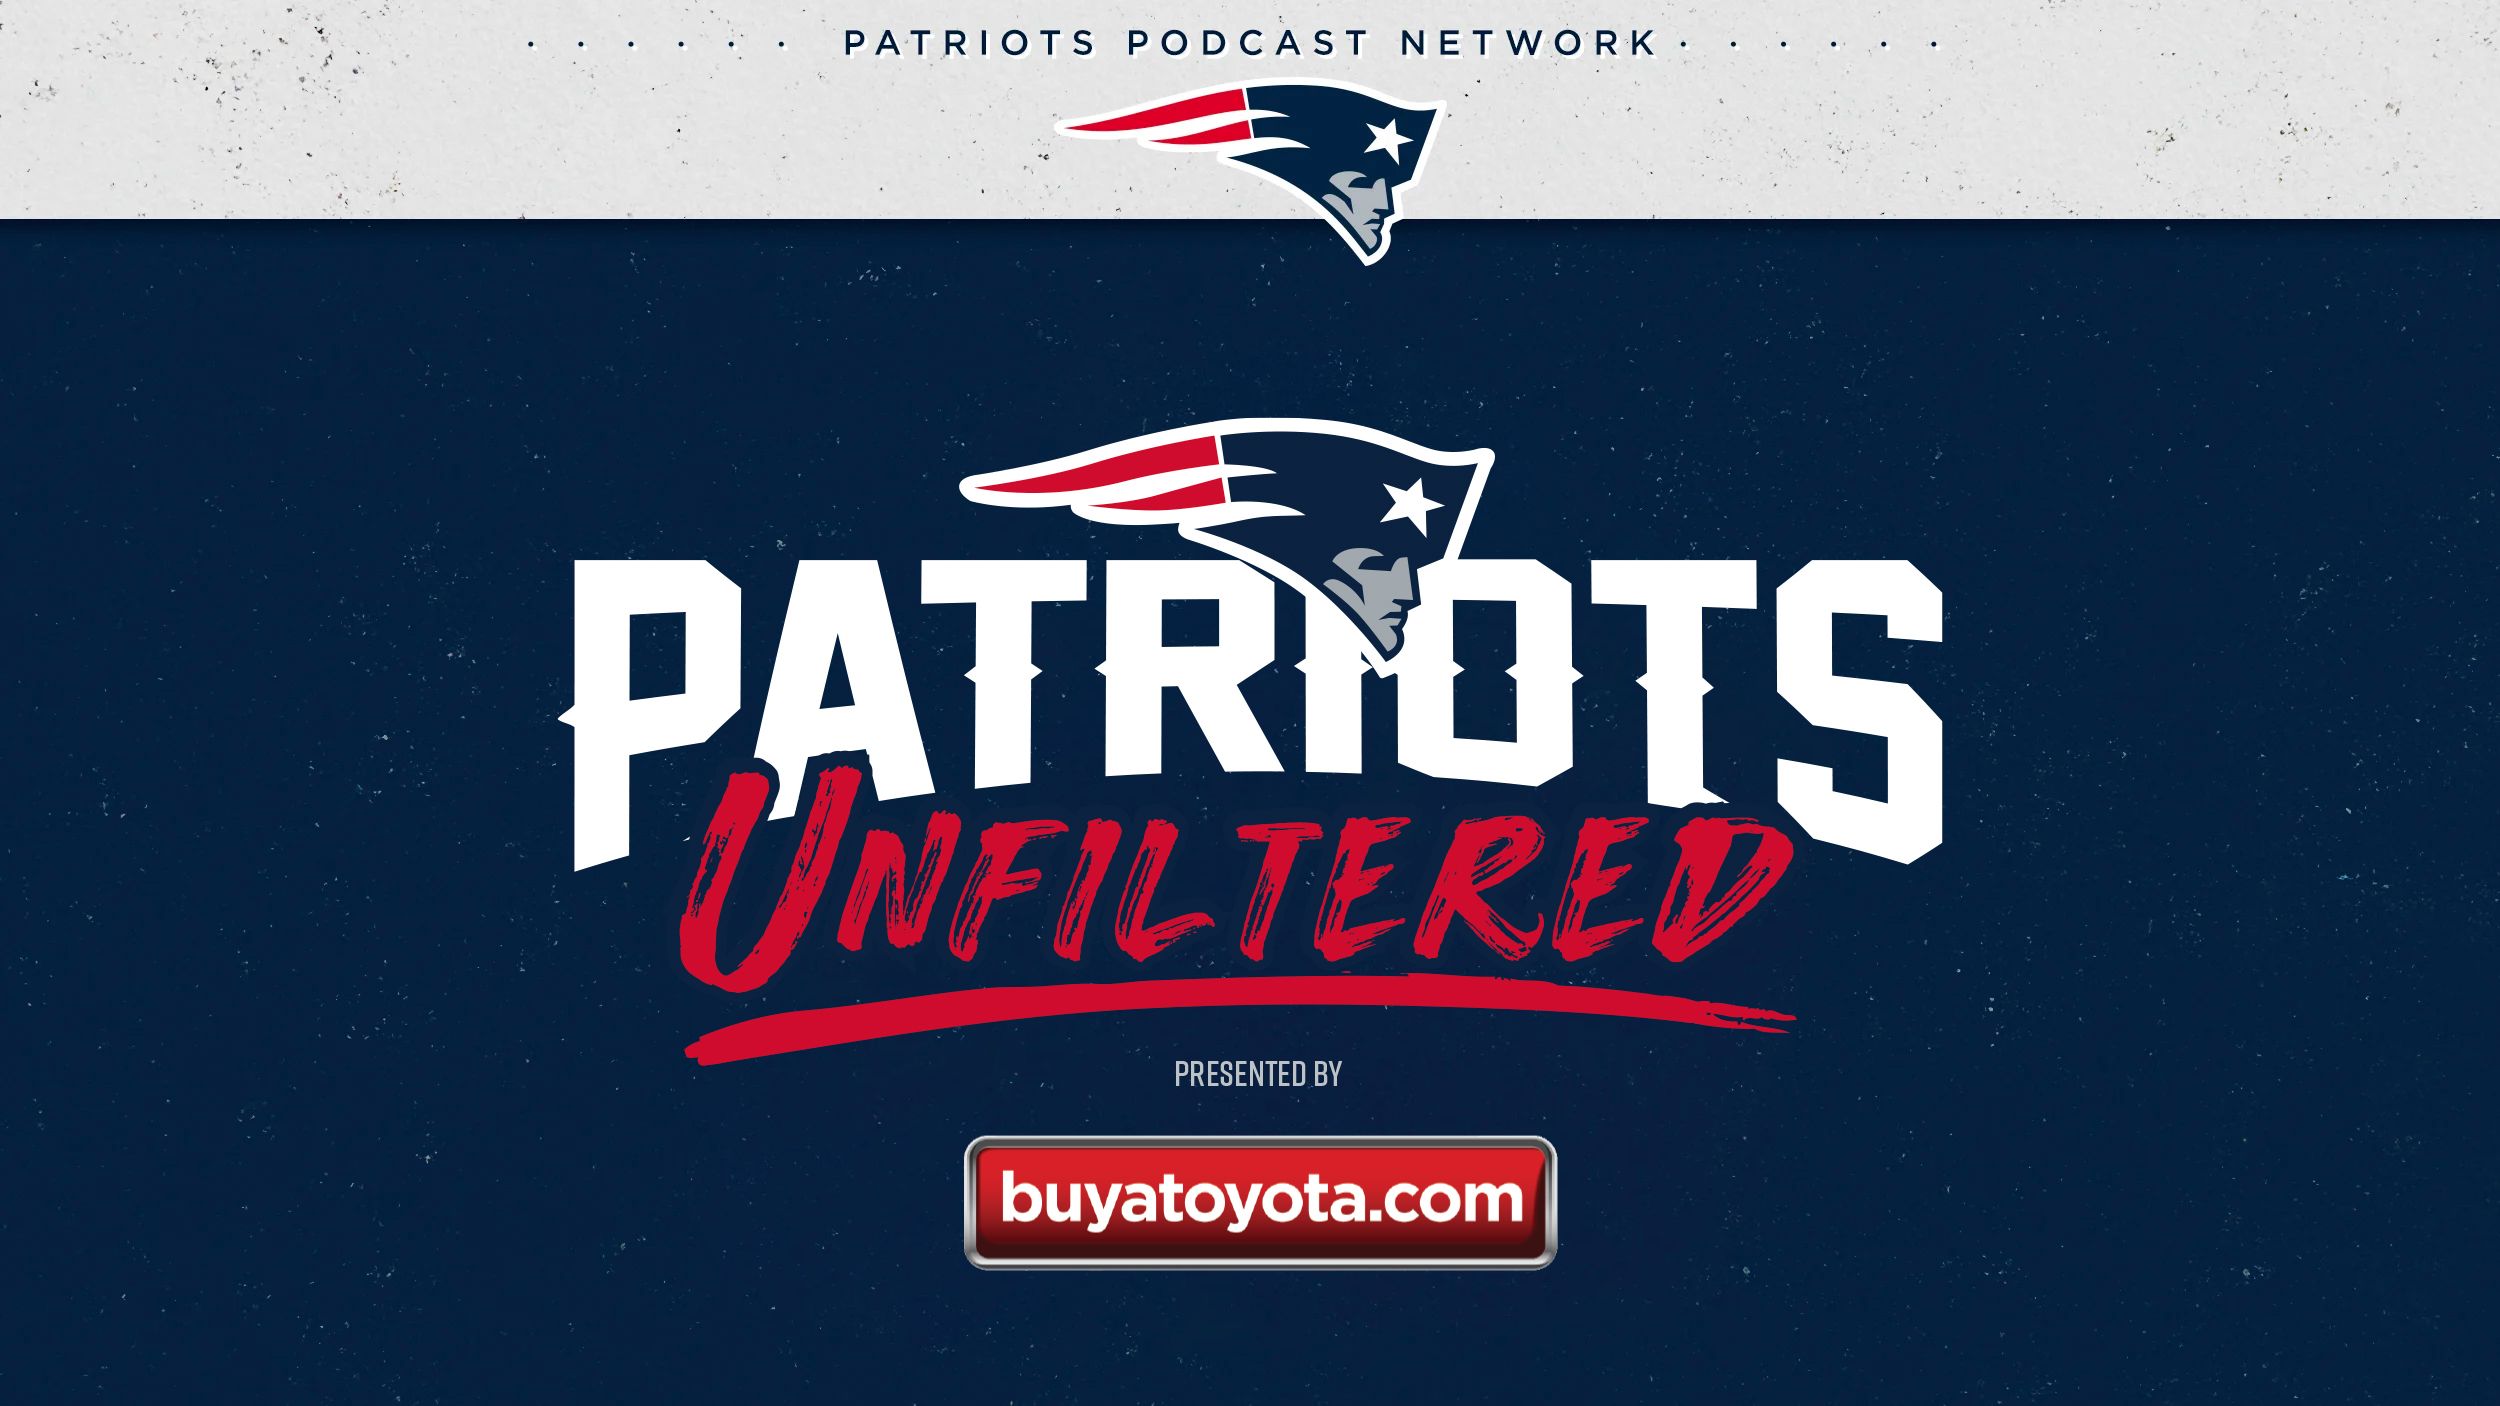 Patriots Live Radio 24/7 New England Patriots and NFL Talk!